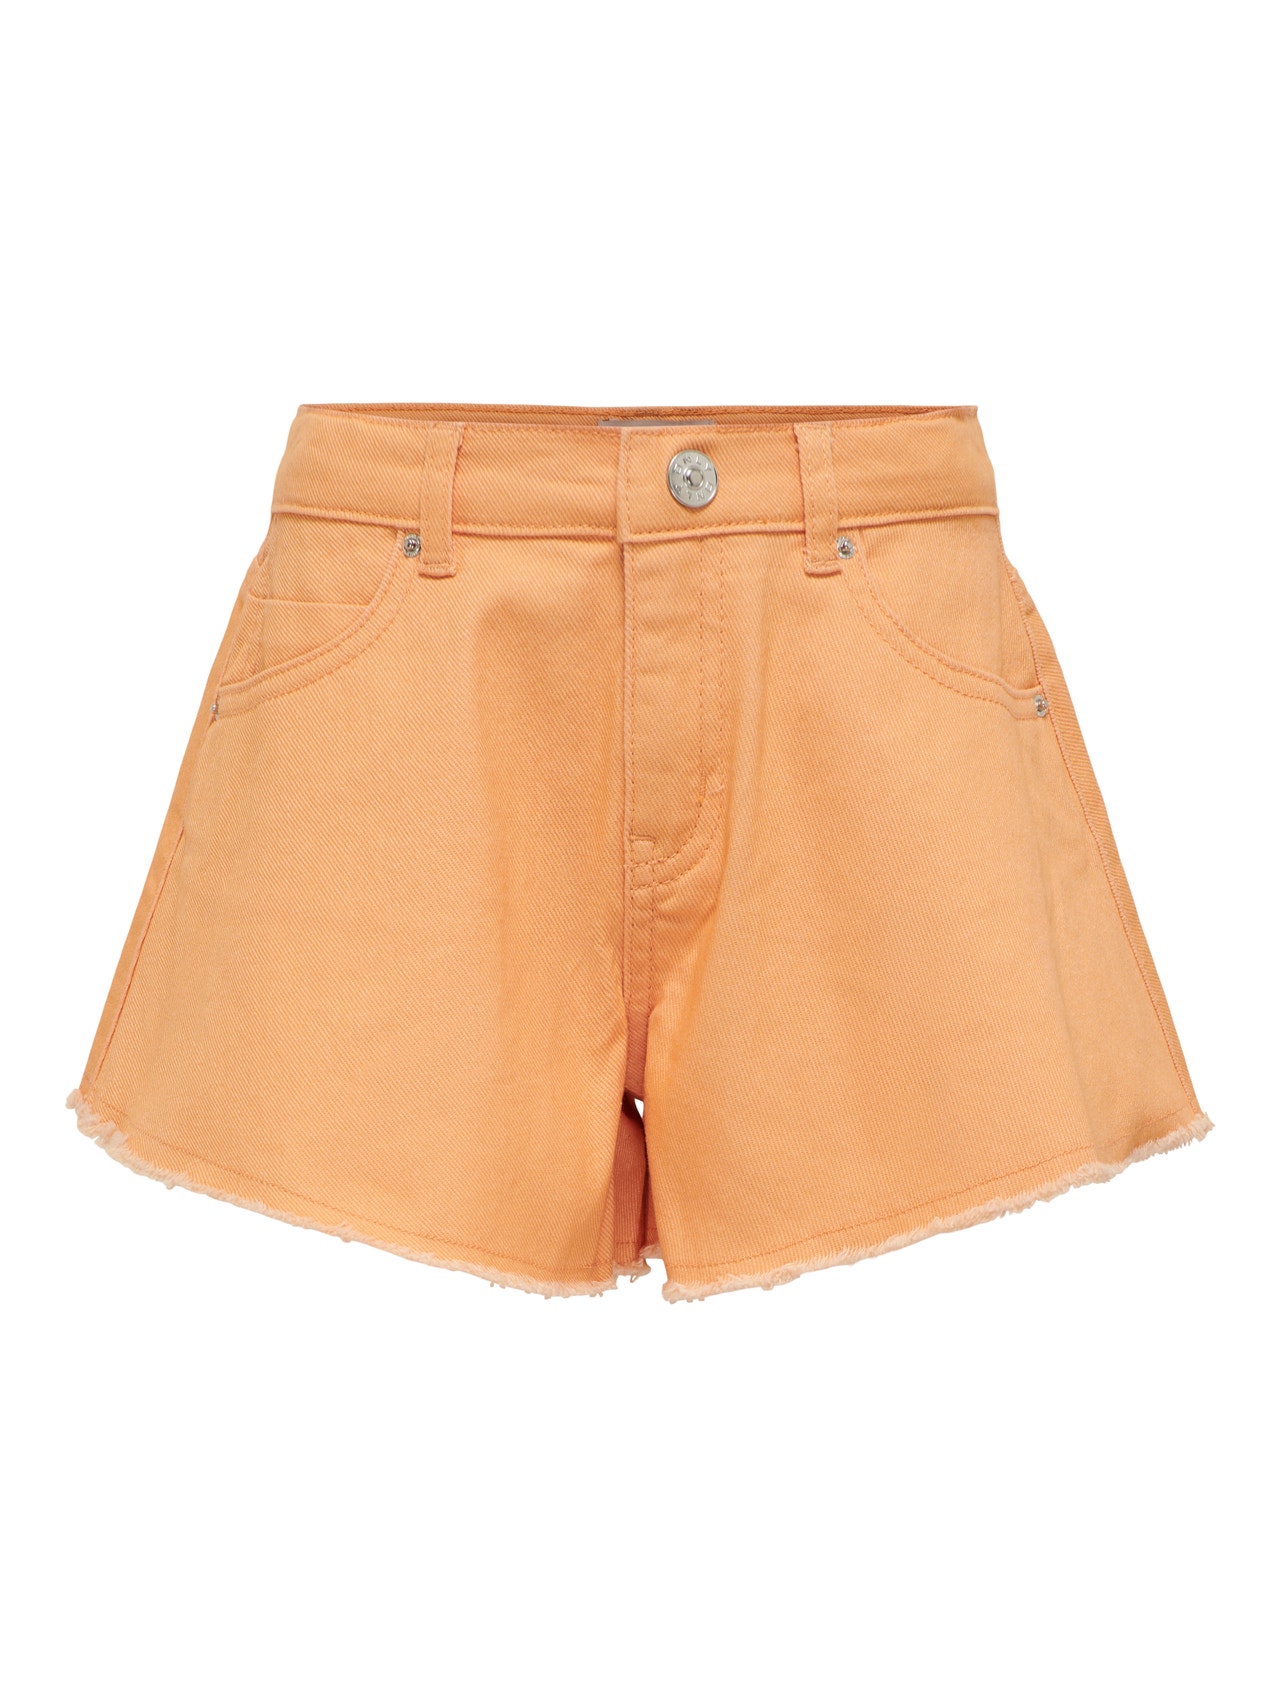 ONLY Shorts Wide Leg Fit -Orange Chiffon - 15260859